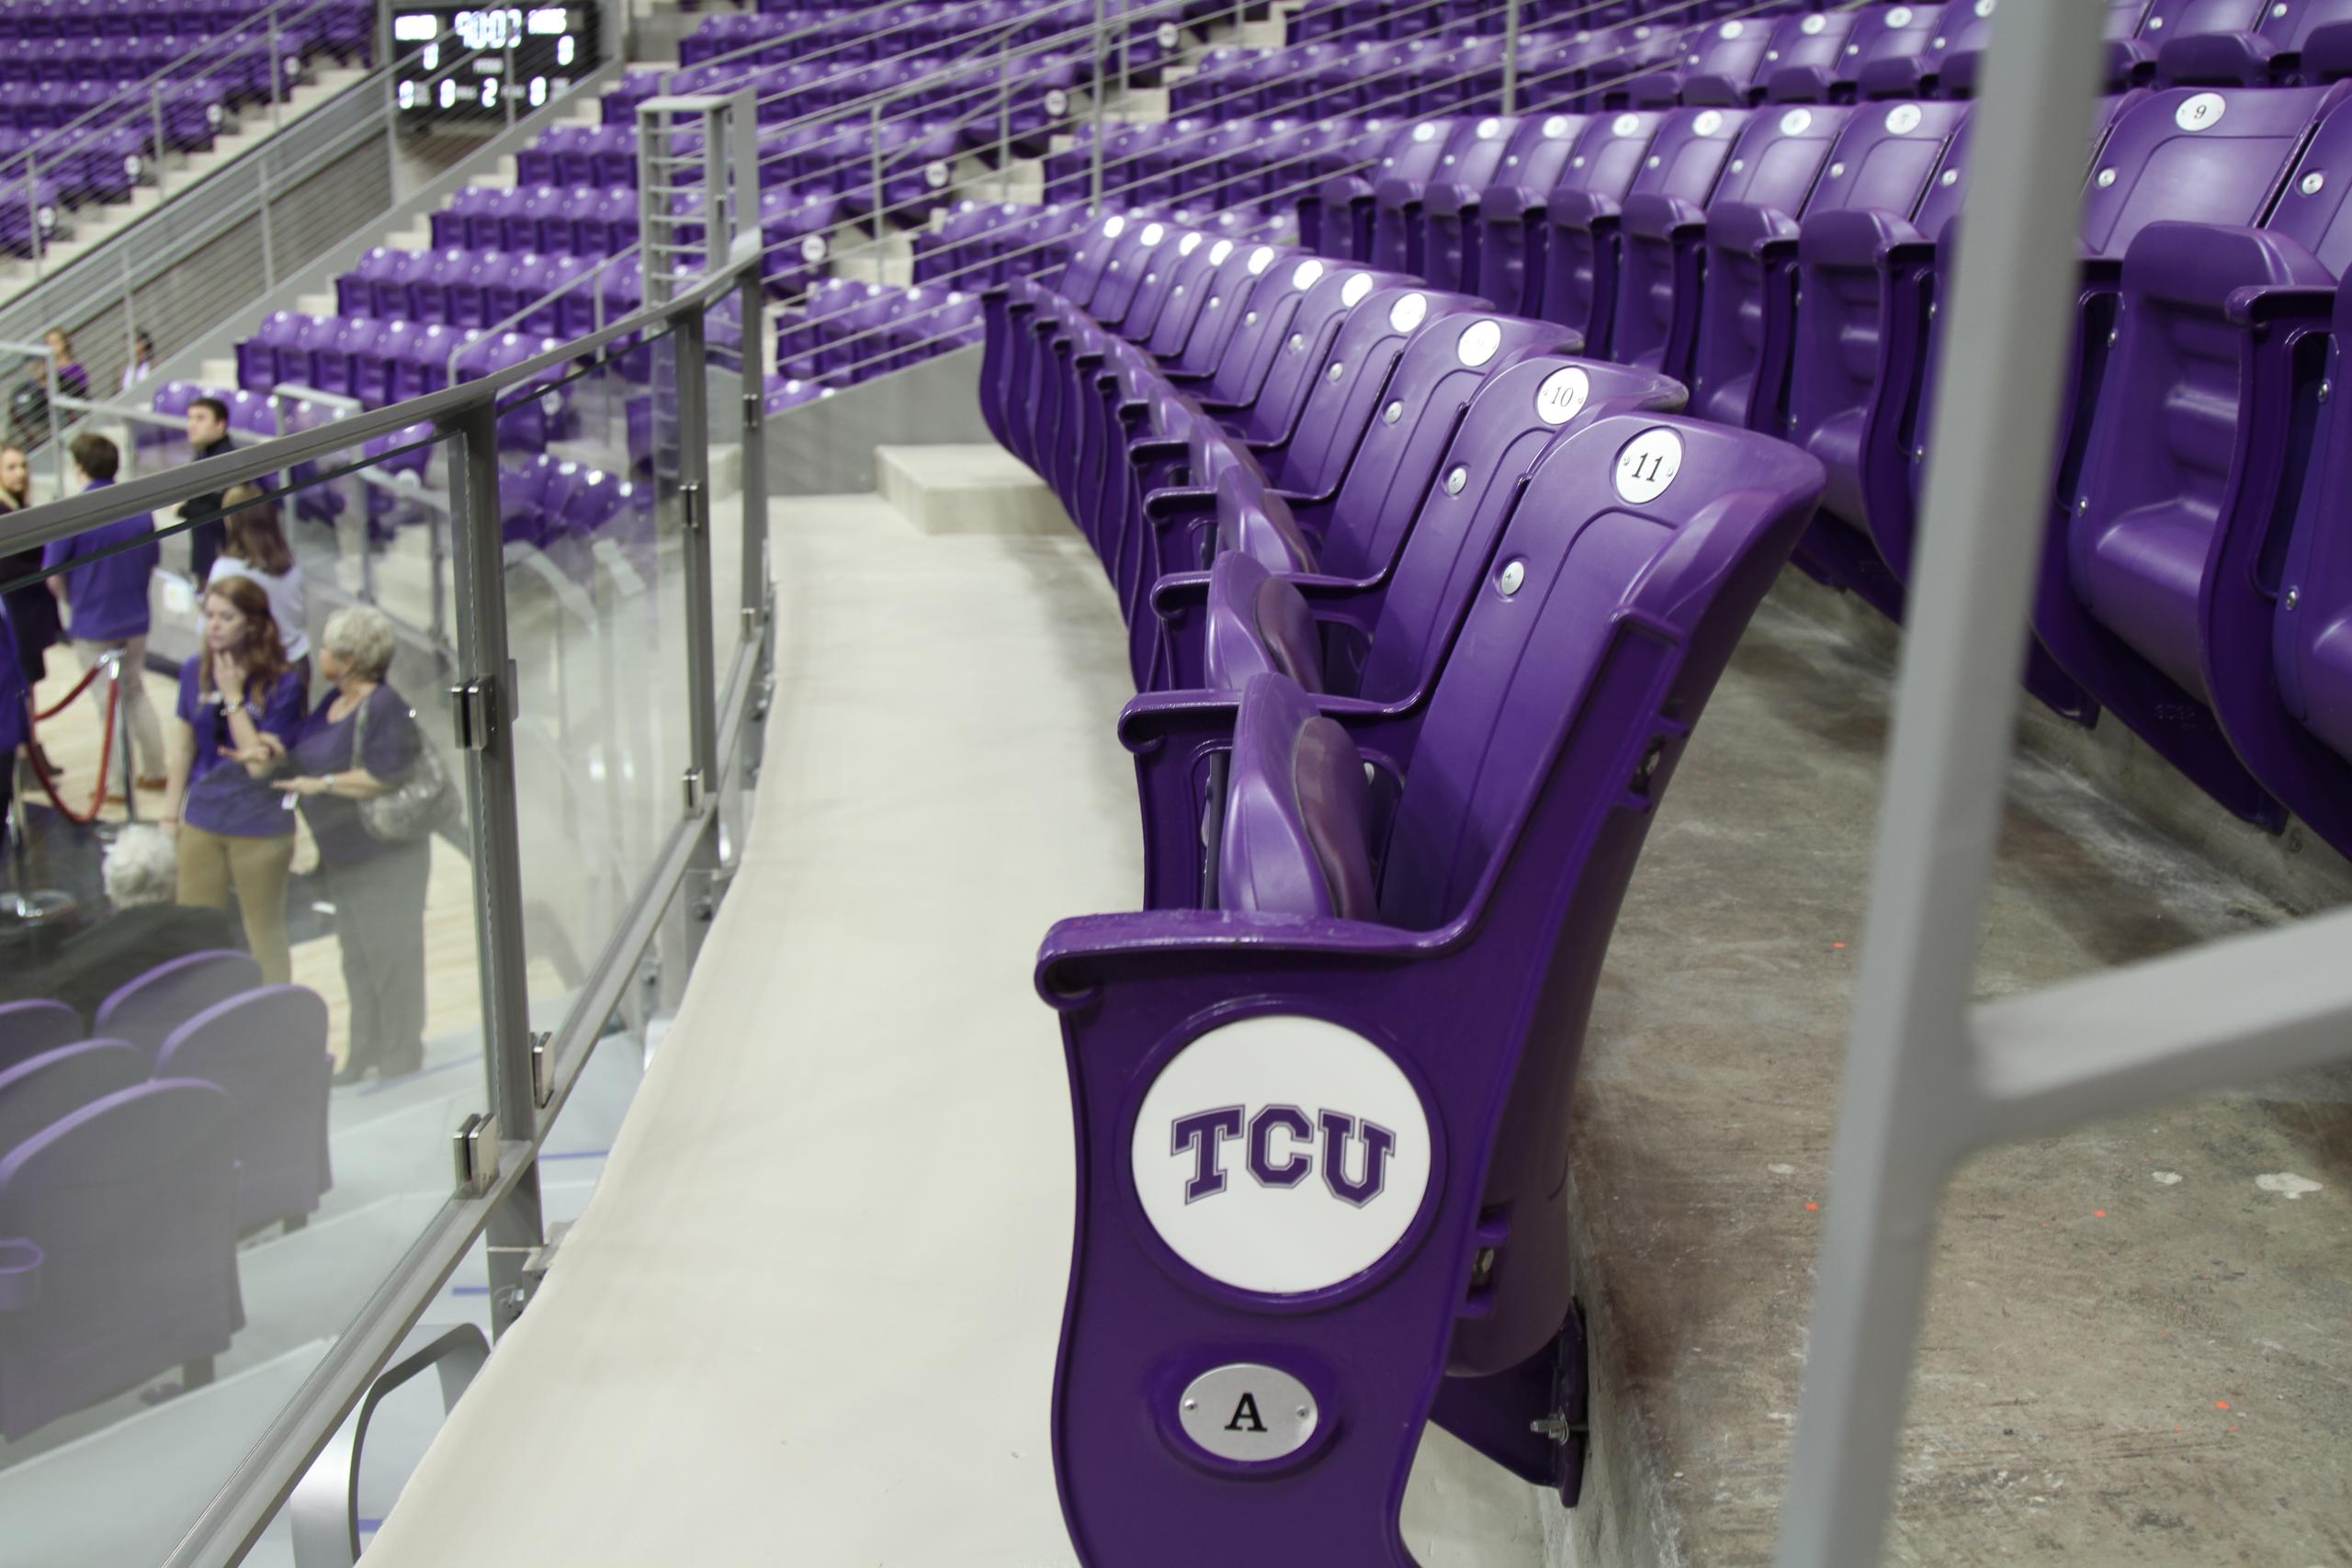 TCU Seating Risers